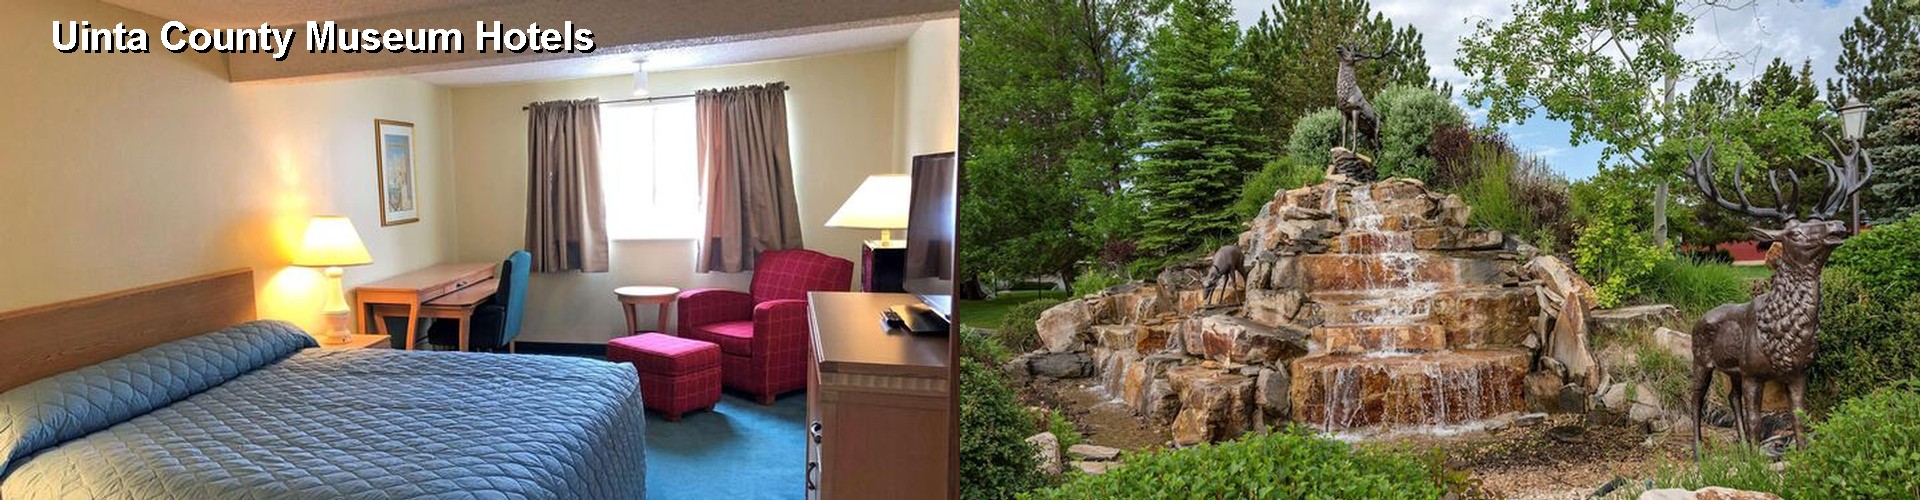 3 Best Hotels near Uinta County Museum